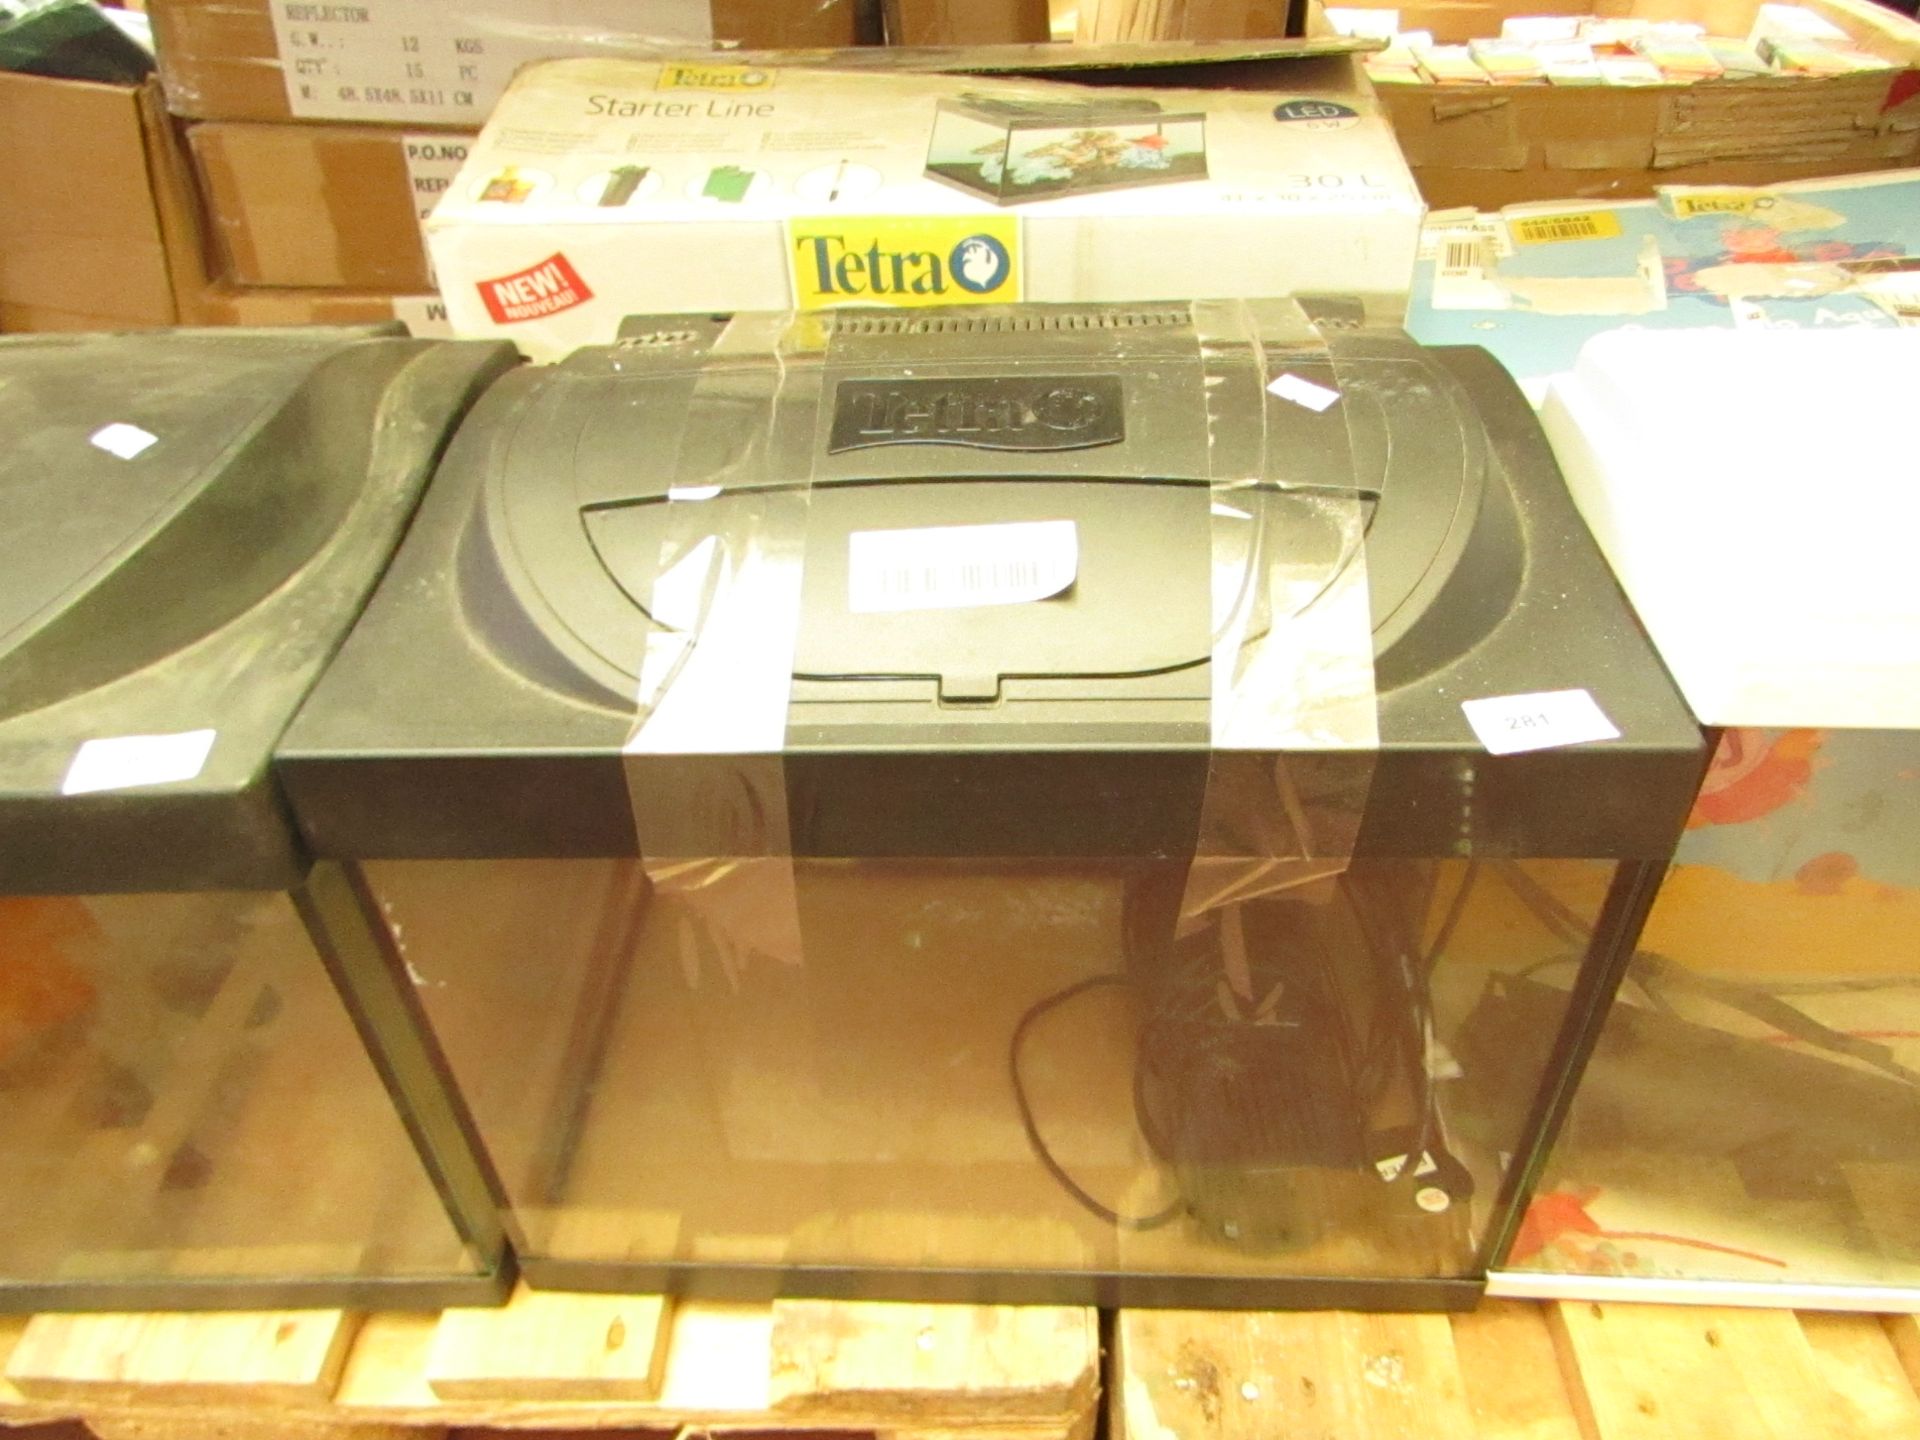 Tetra Starter Line fish tank, boxed.